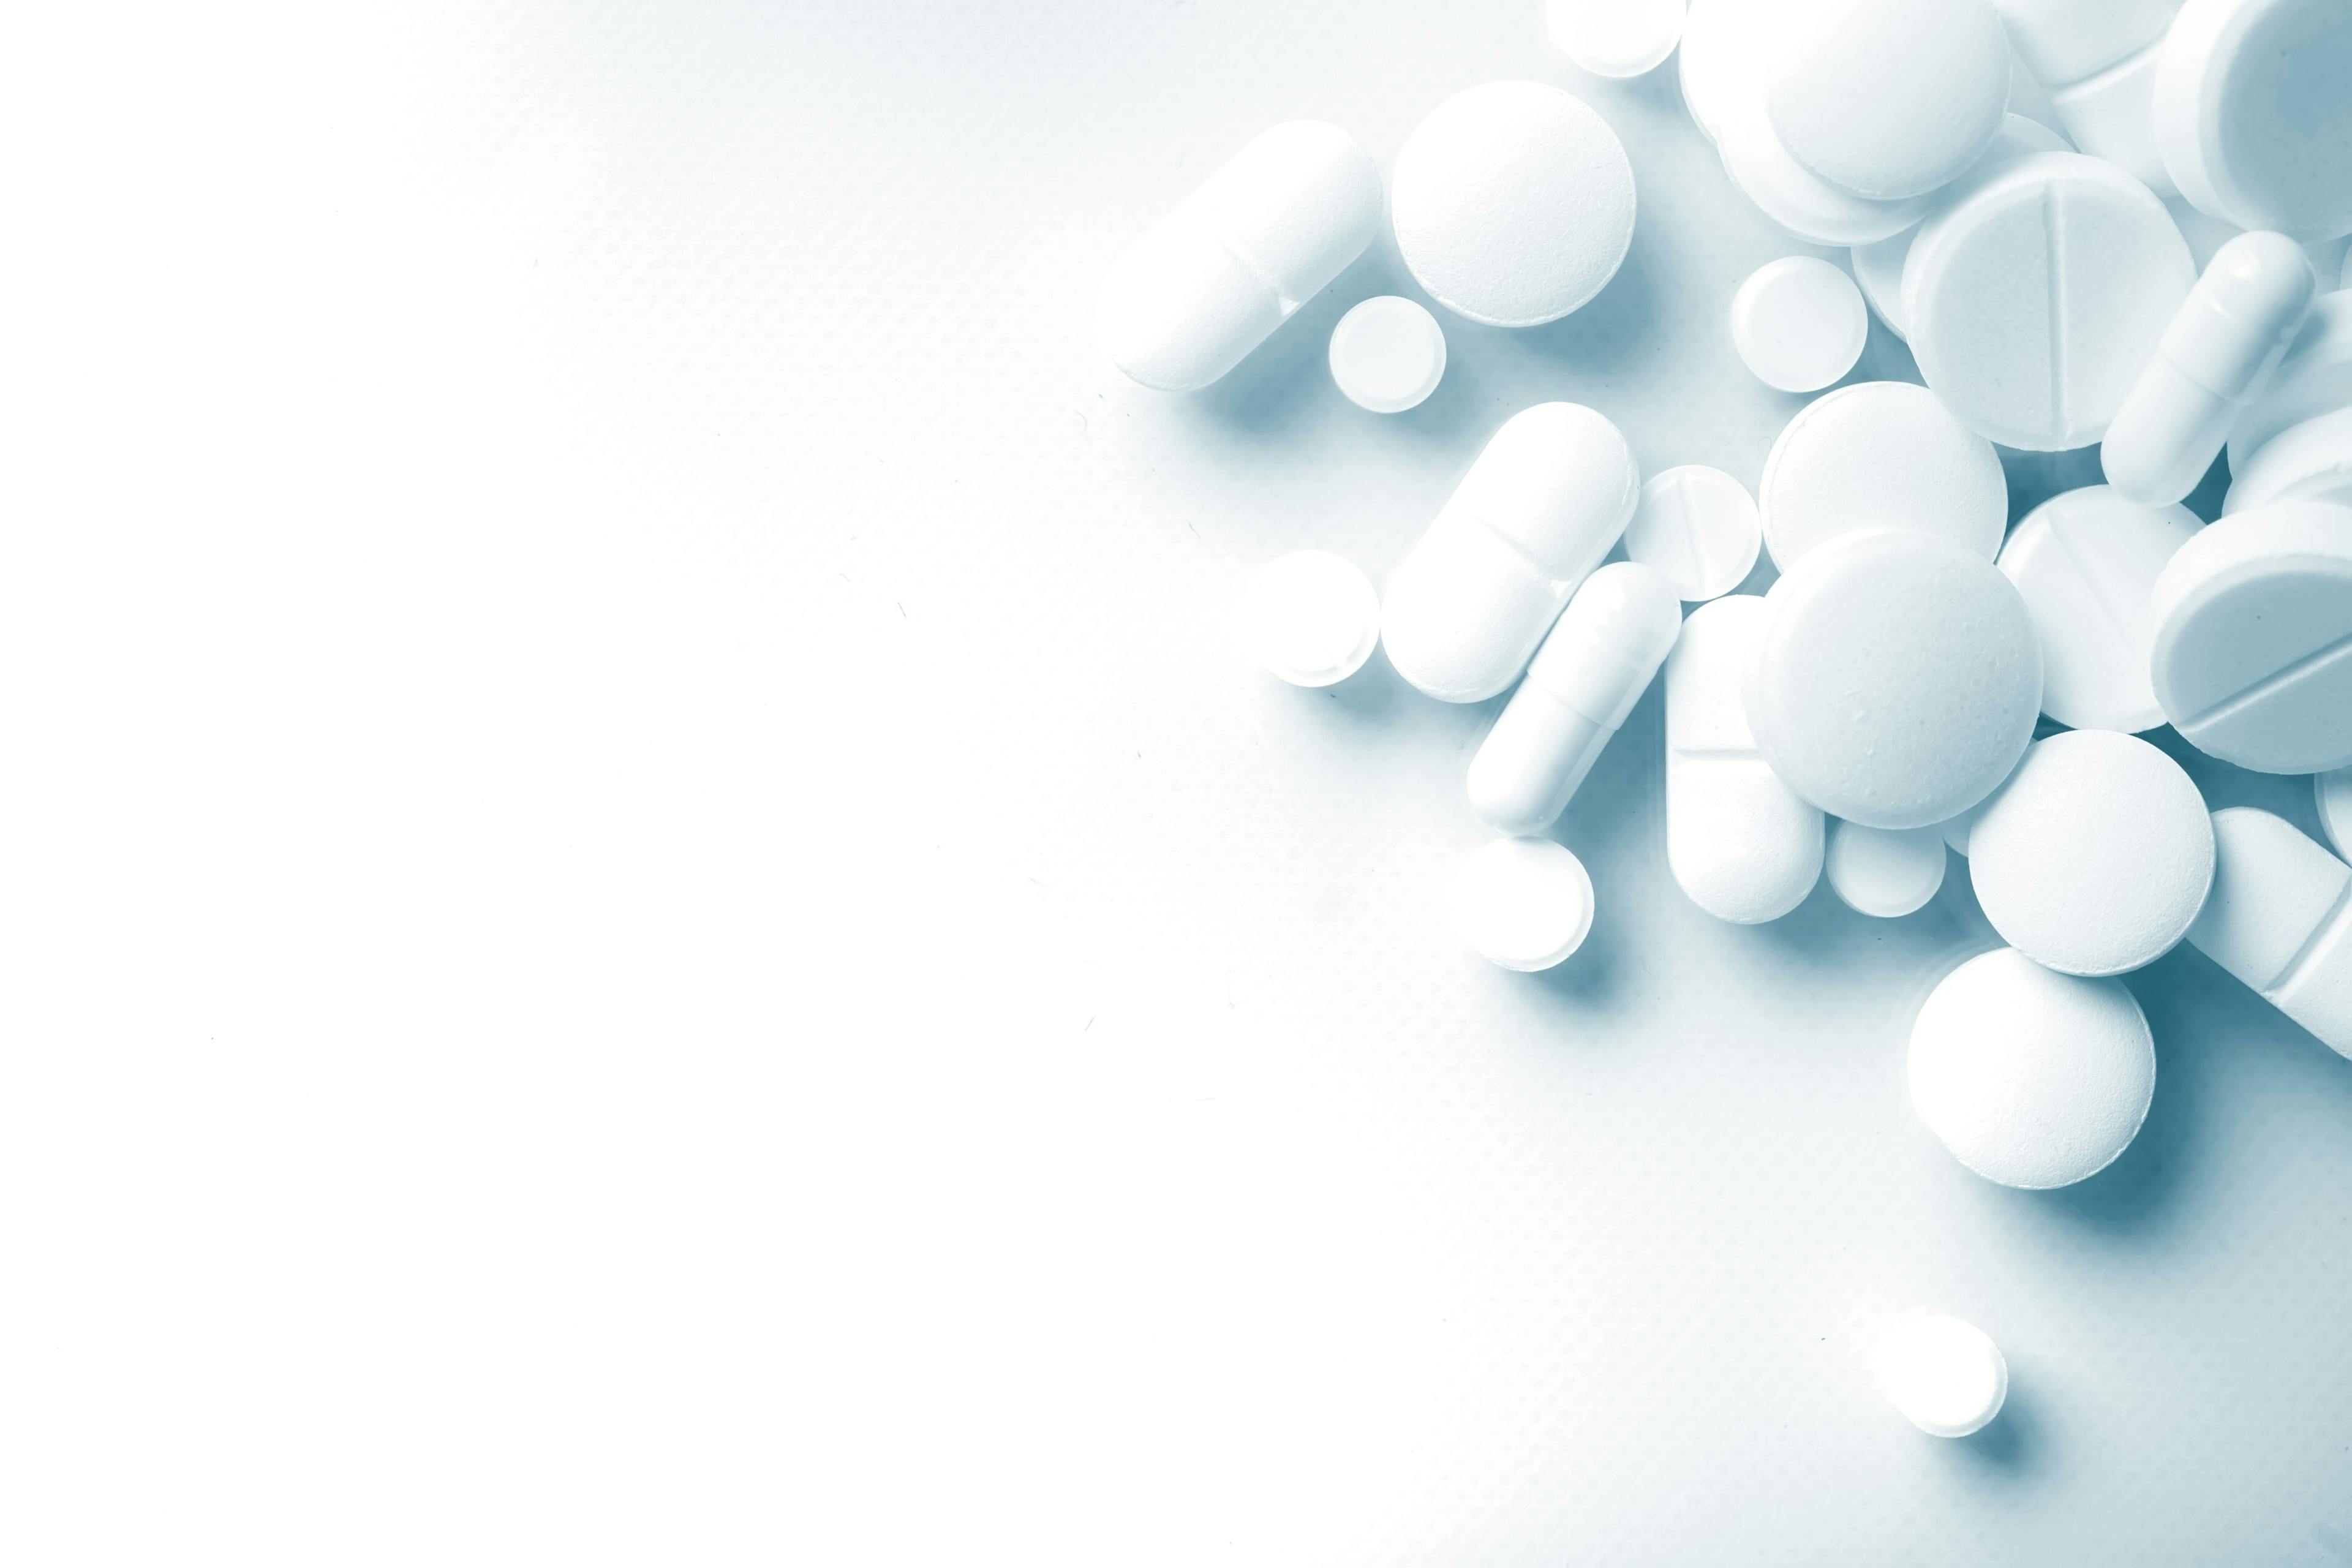 White medicine tablets antibiotic pills; pharmacy, biopharmacy | Image Credit:  zadorozhna - stock.adobe.com